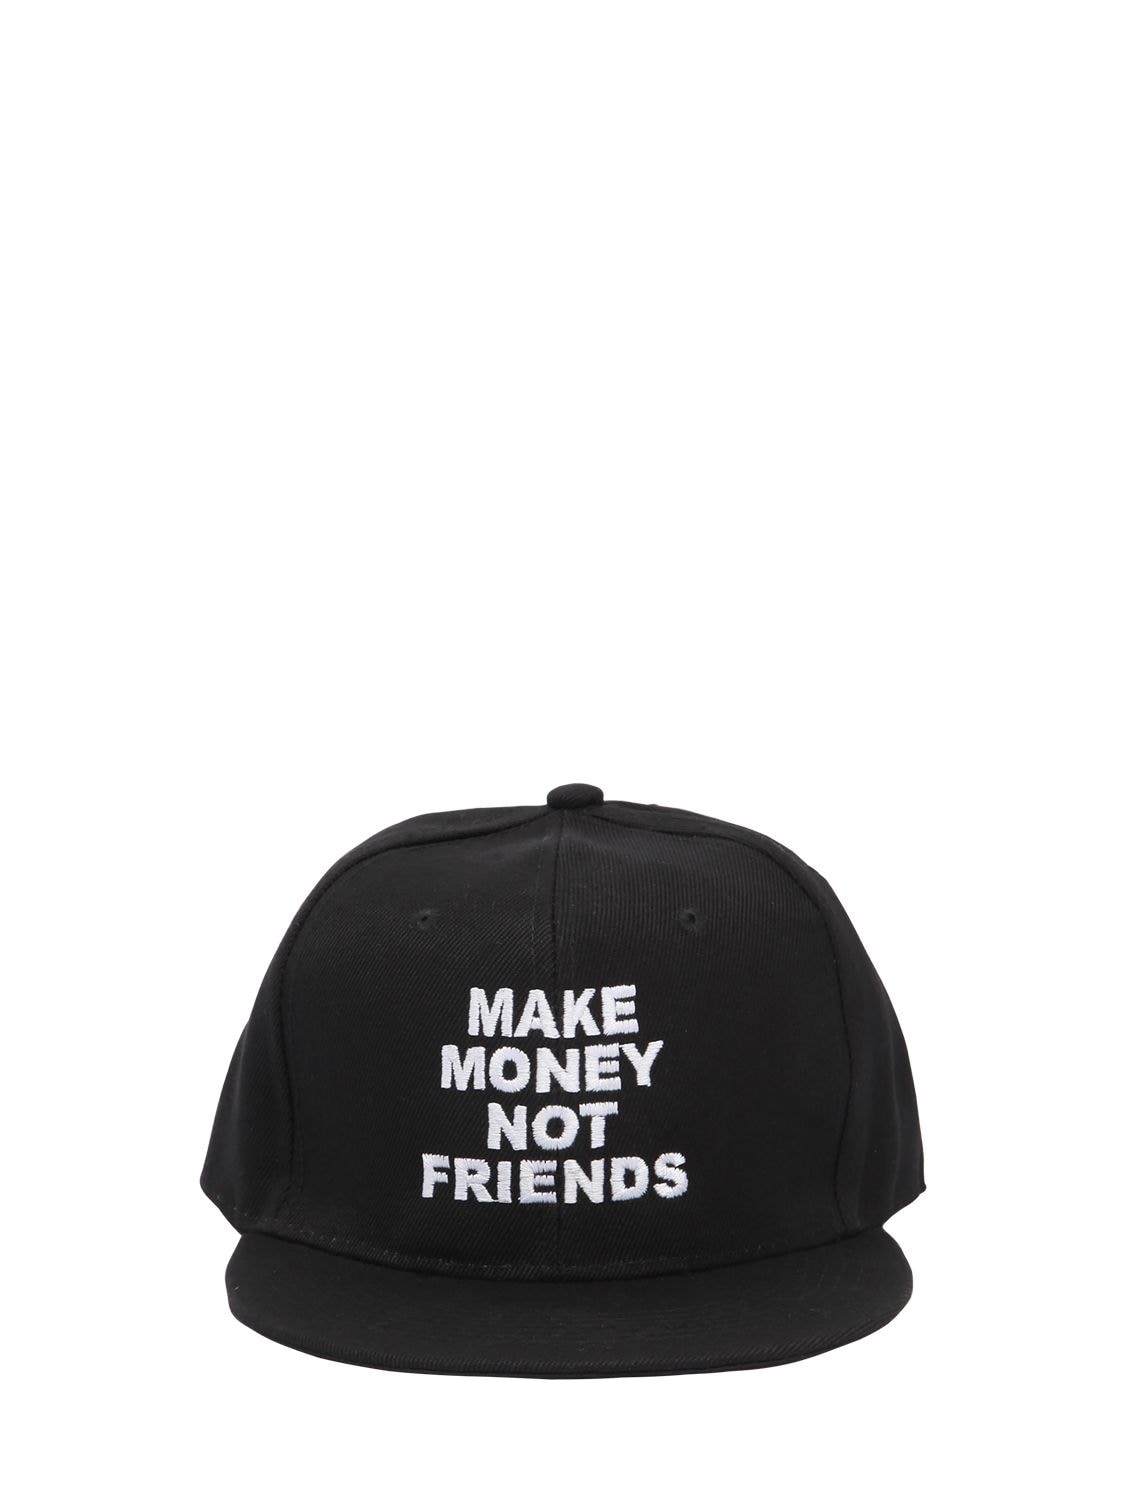 MAKE MONEY NOT FRIENDS LOGO EMBROIDERED BASEBALL HAT,68IWIX012-MDAy0